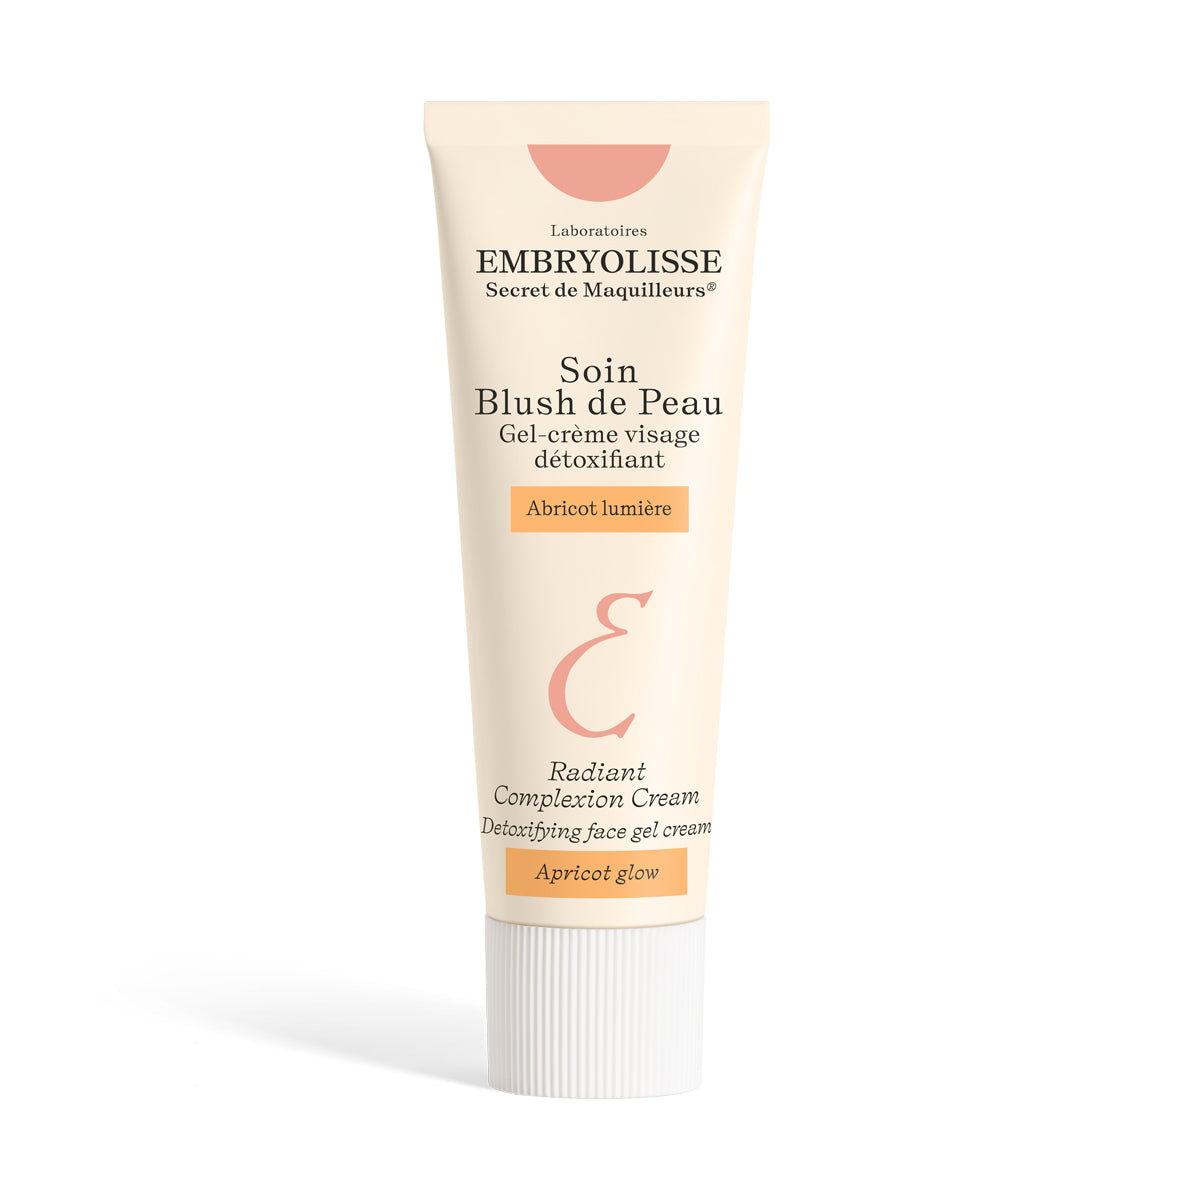 Radiant complexion Cream - Apricot Glow